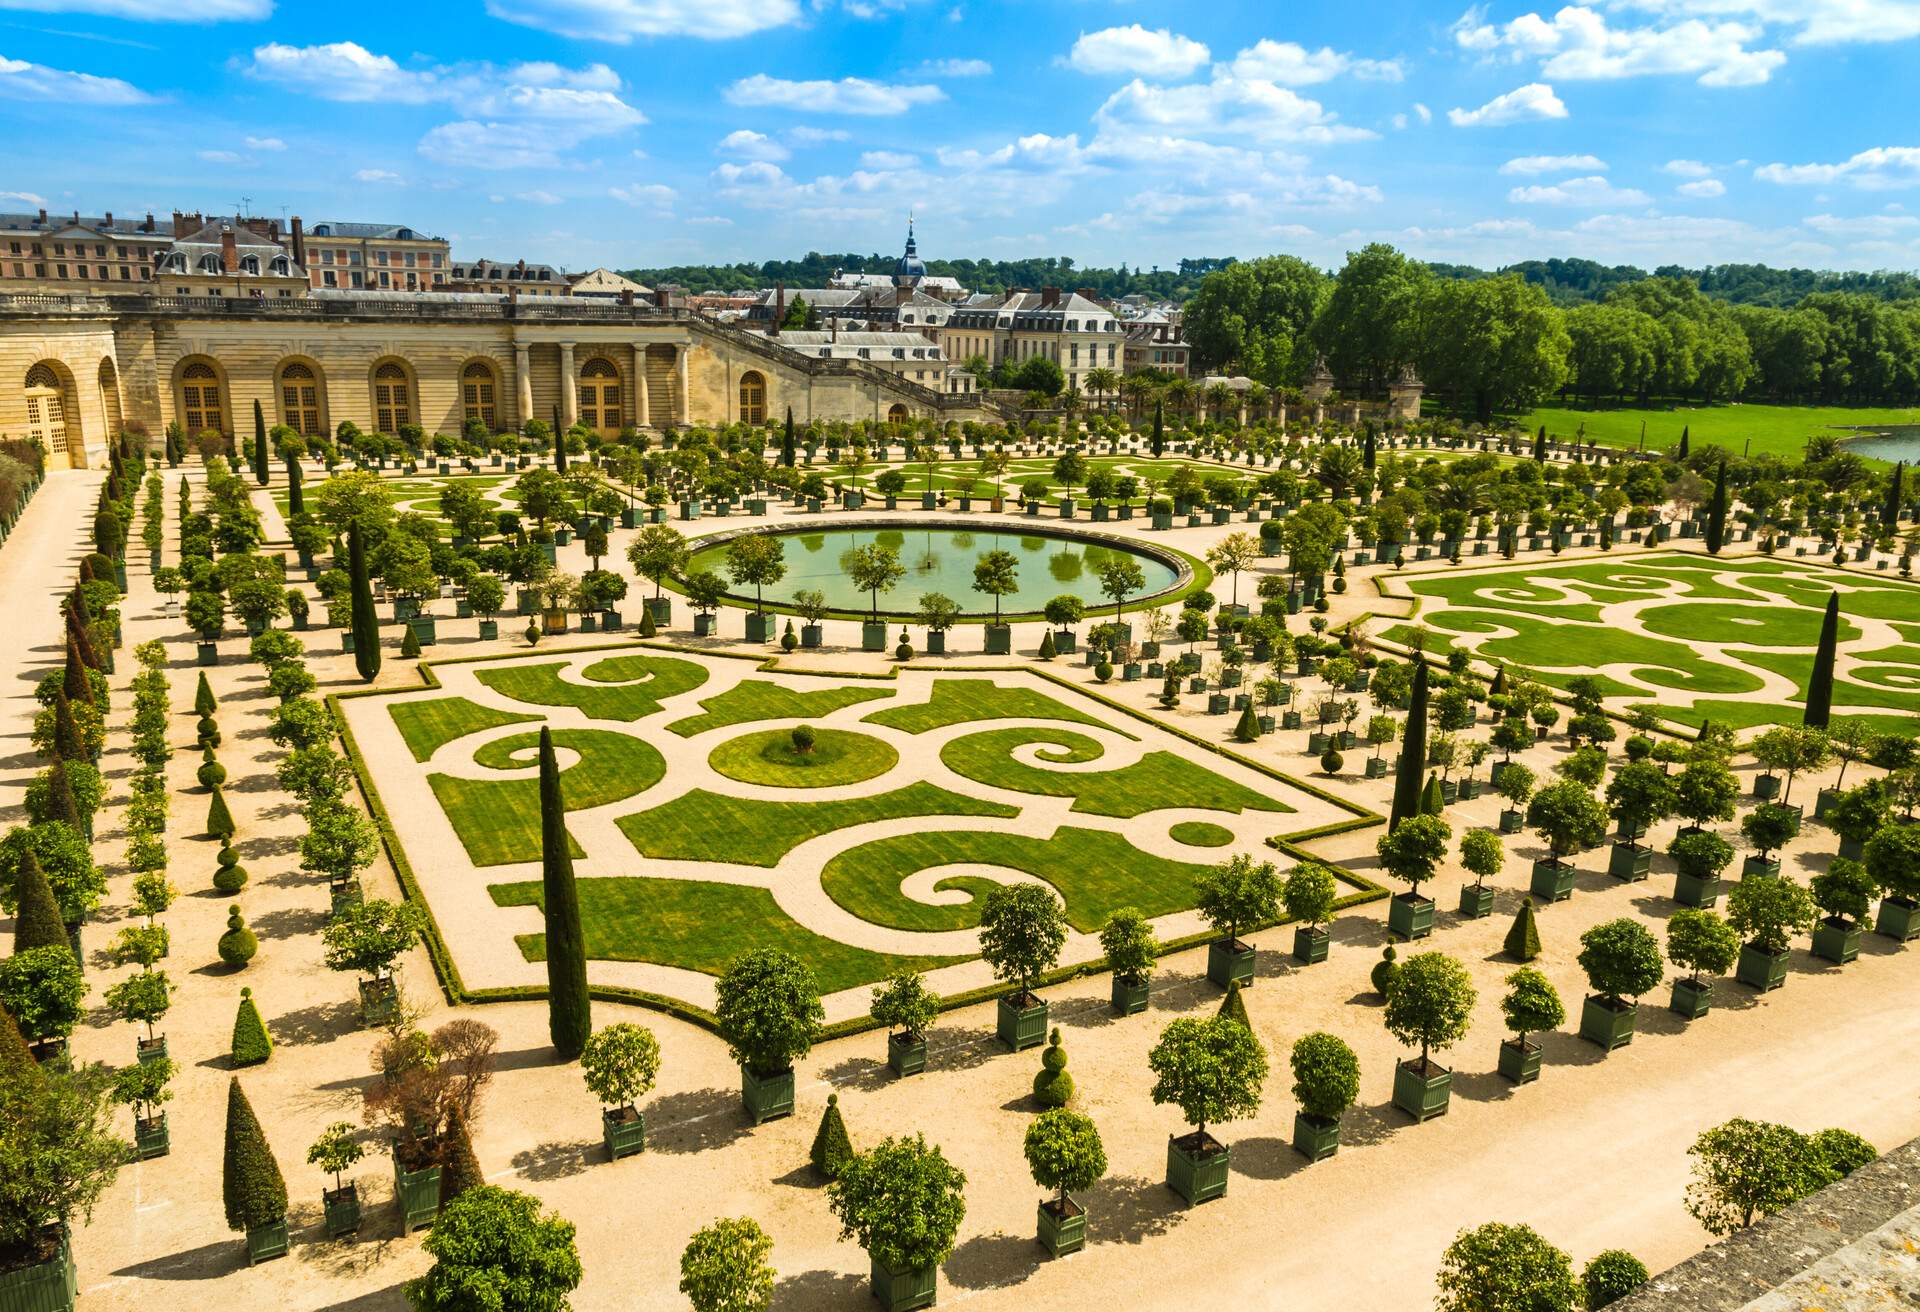 Versailles, France: Gardens of the Versailles Palace near Paris, France